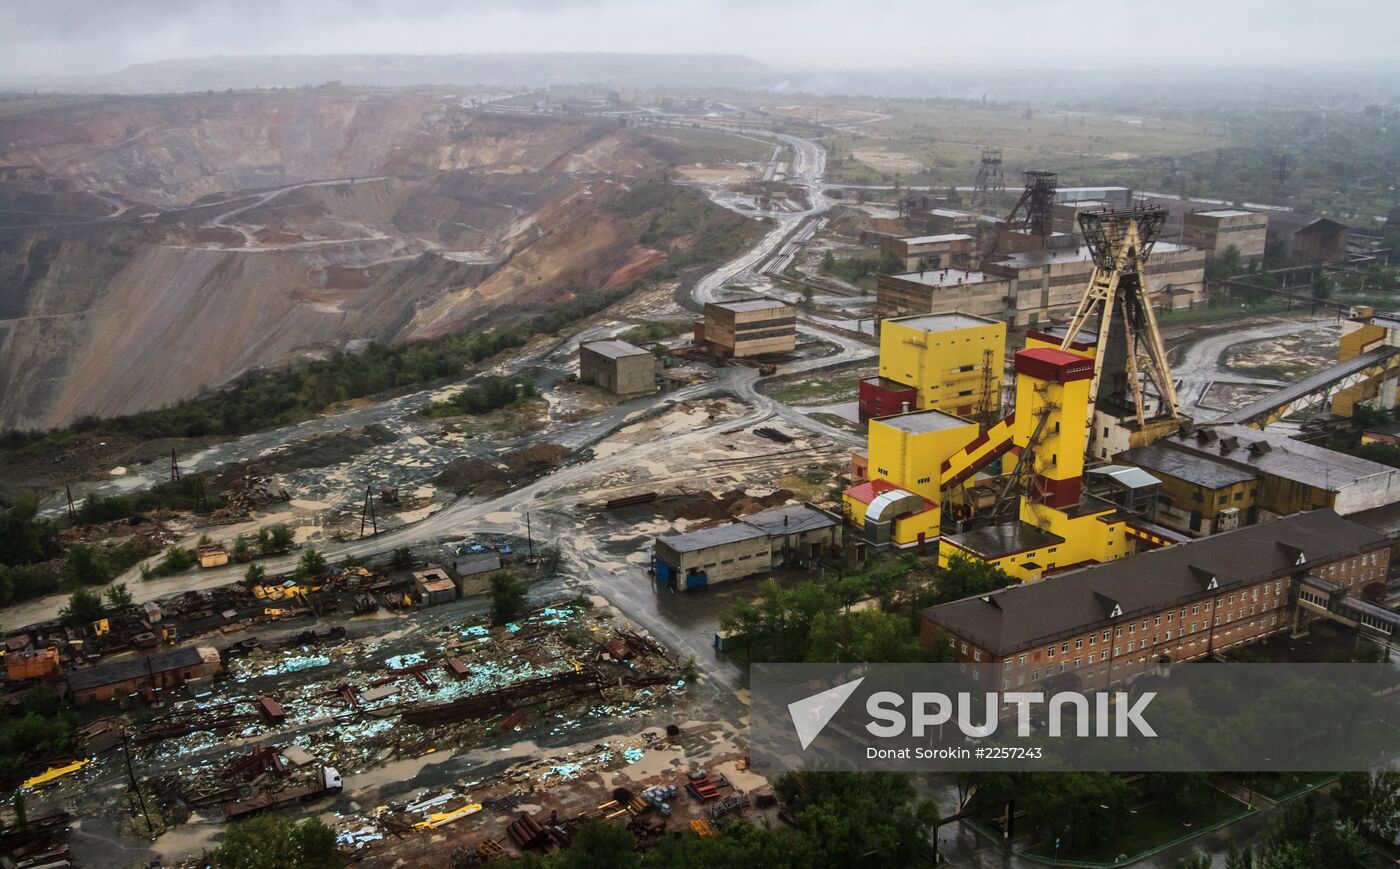 Gaisky Mining and Processing Plant in Orenburg region